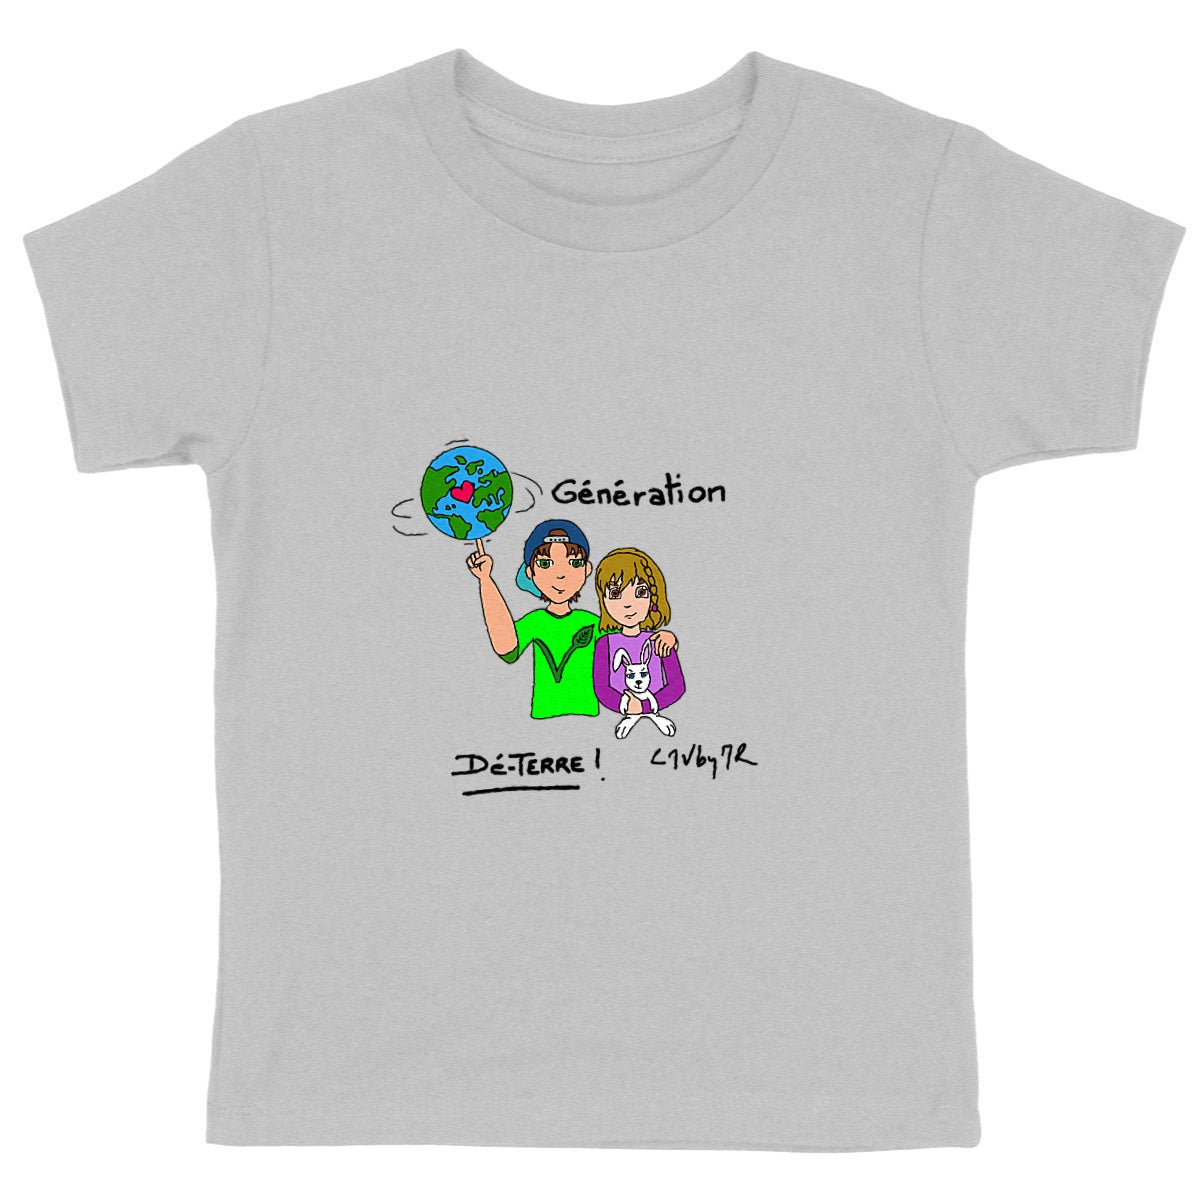 Tee-shirt Enfant LMV GENERATION DE-TERRE !